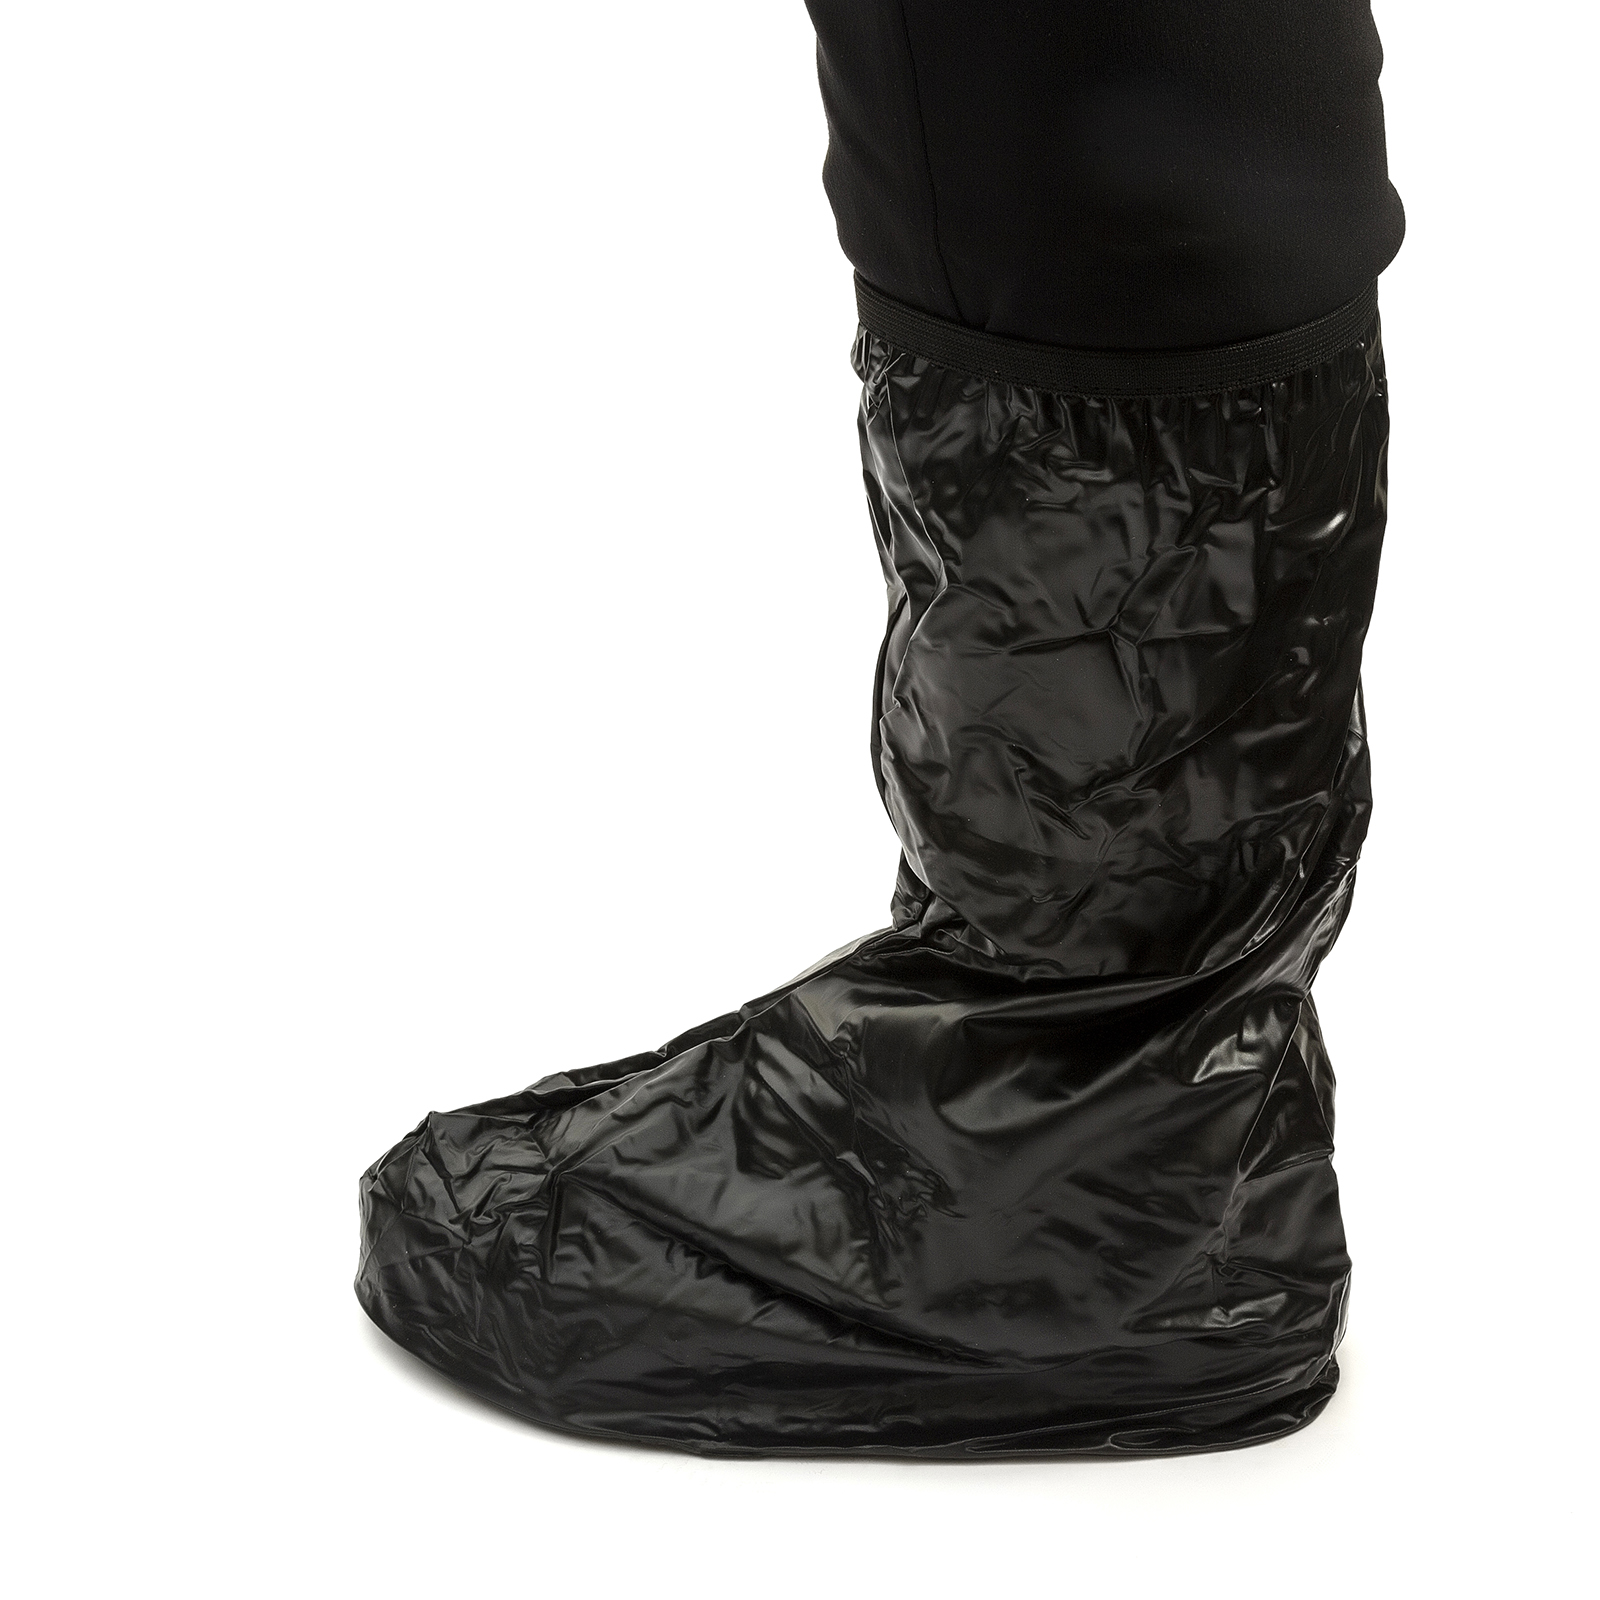 PVC Waterproof Rain Boot Shoe Cover Black Reusable Overshoe Work ...